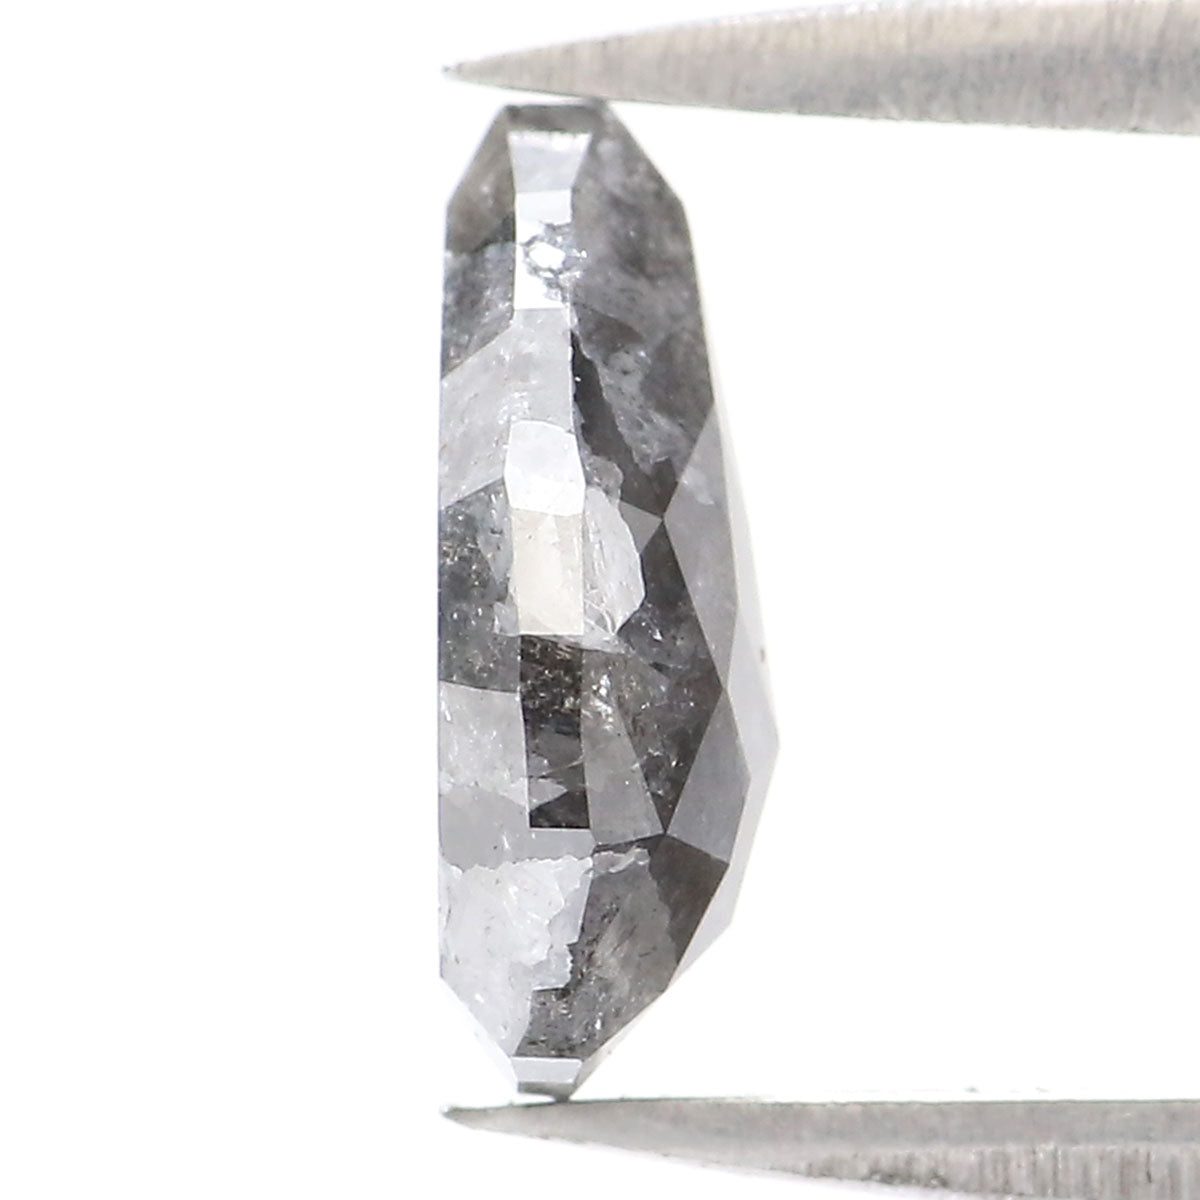 Natural Loose Pear Salt And Pepper Diamond Black Grey Color 1.46 CT 9.10 MM Pear Shape Rose Cut Diamond L2332